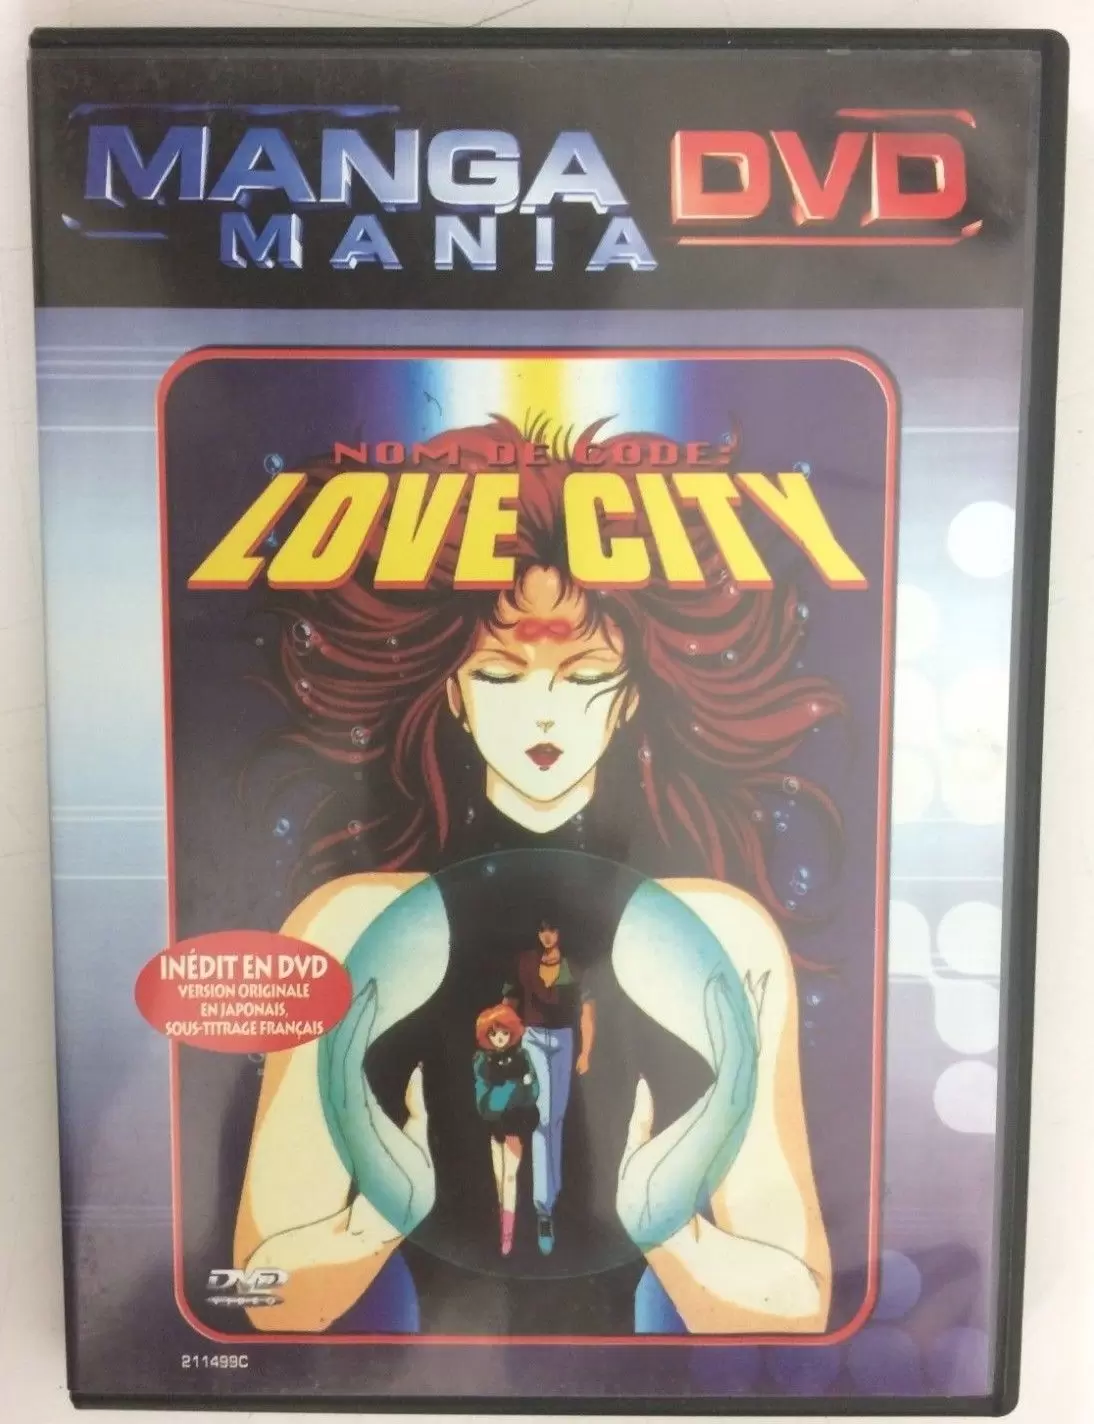 Manga Mania DVD - Love City